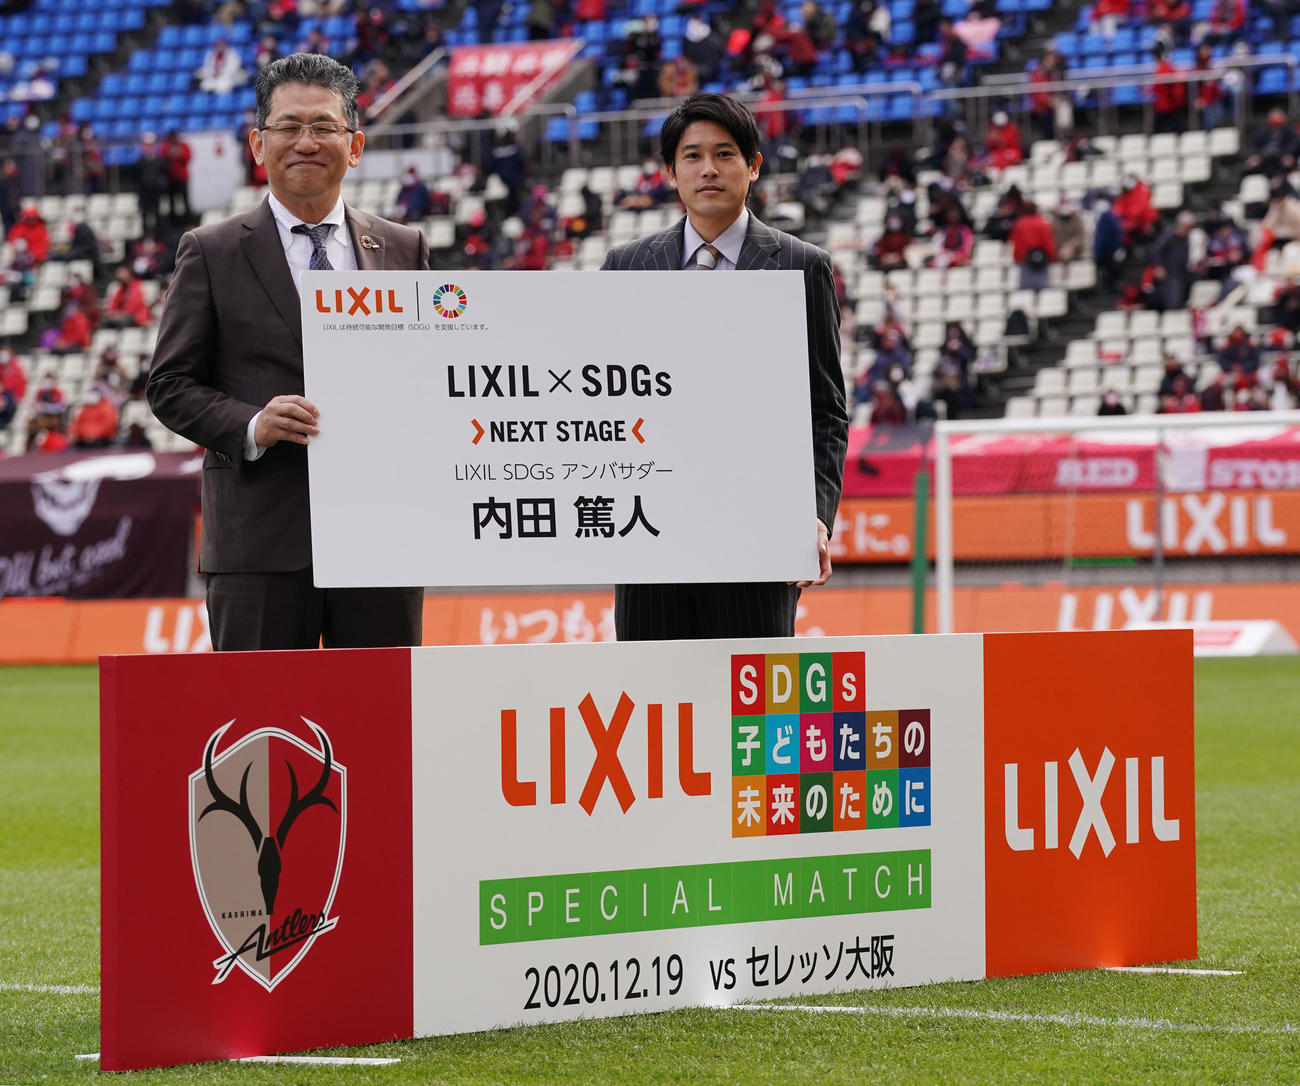 「LIXIL×SDGs　NEXT　STAGE」のプロジェクトアンバサダーに就任し、ボードを手に瀬戸社長（左）と記念写真に納まる内田氏（撮影・菅敏）